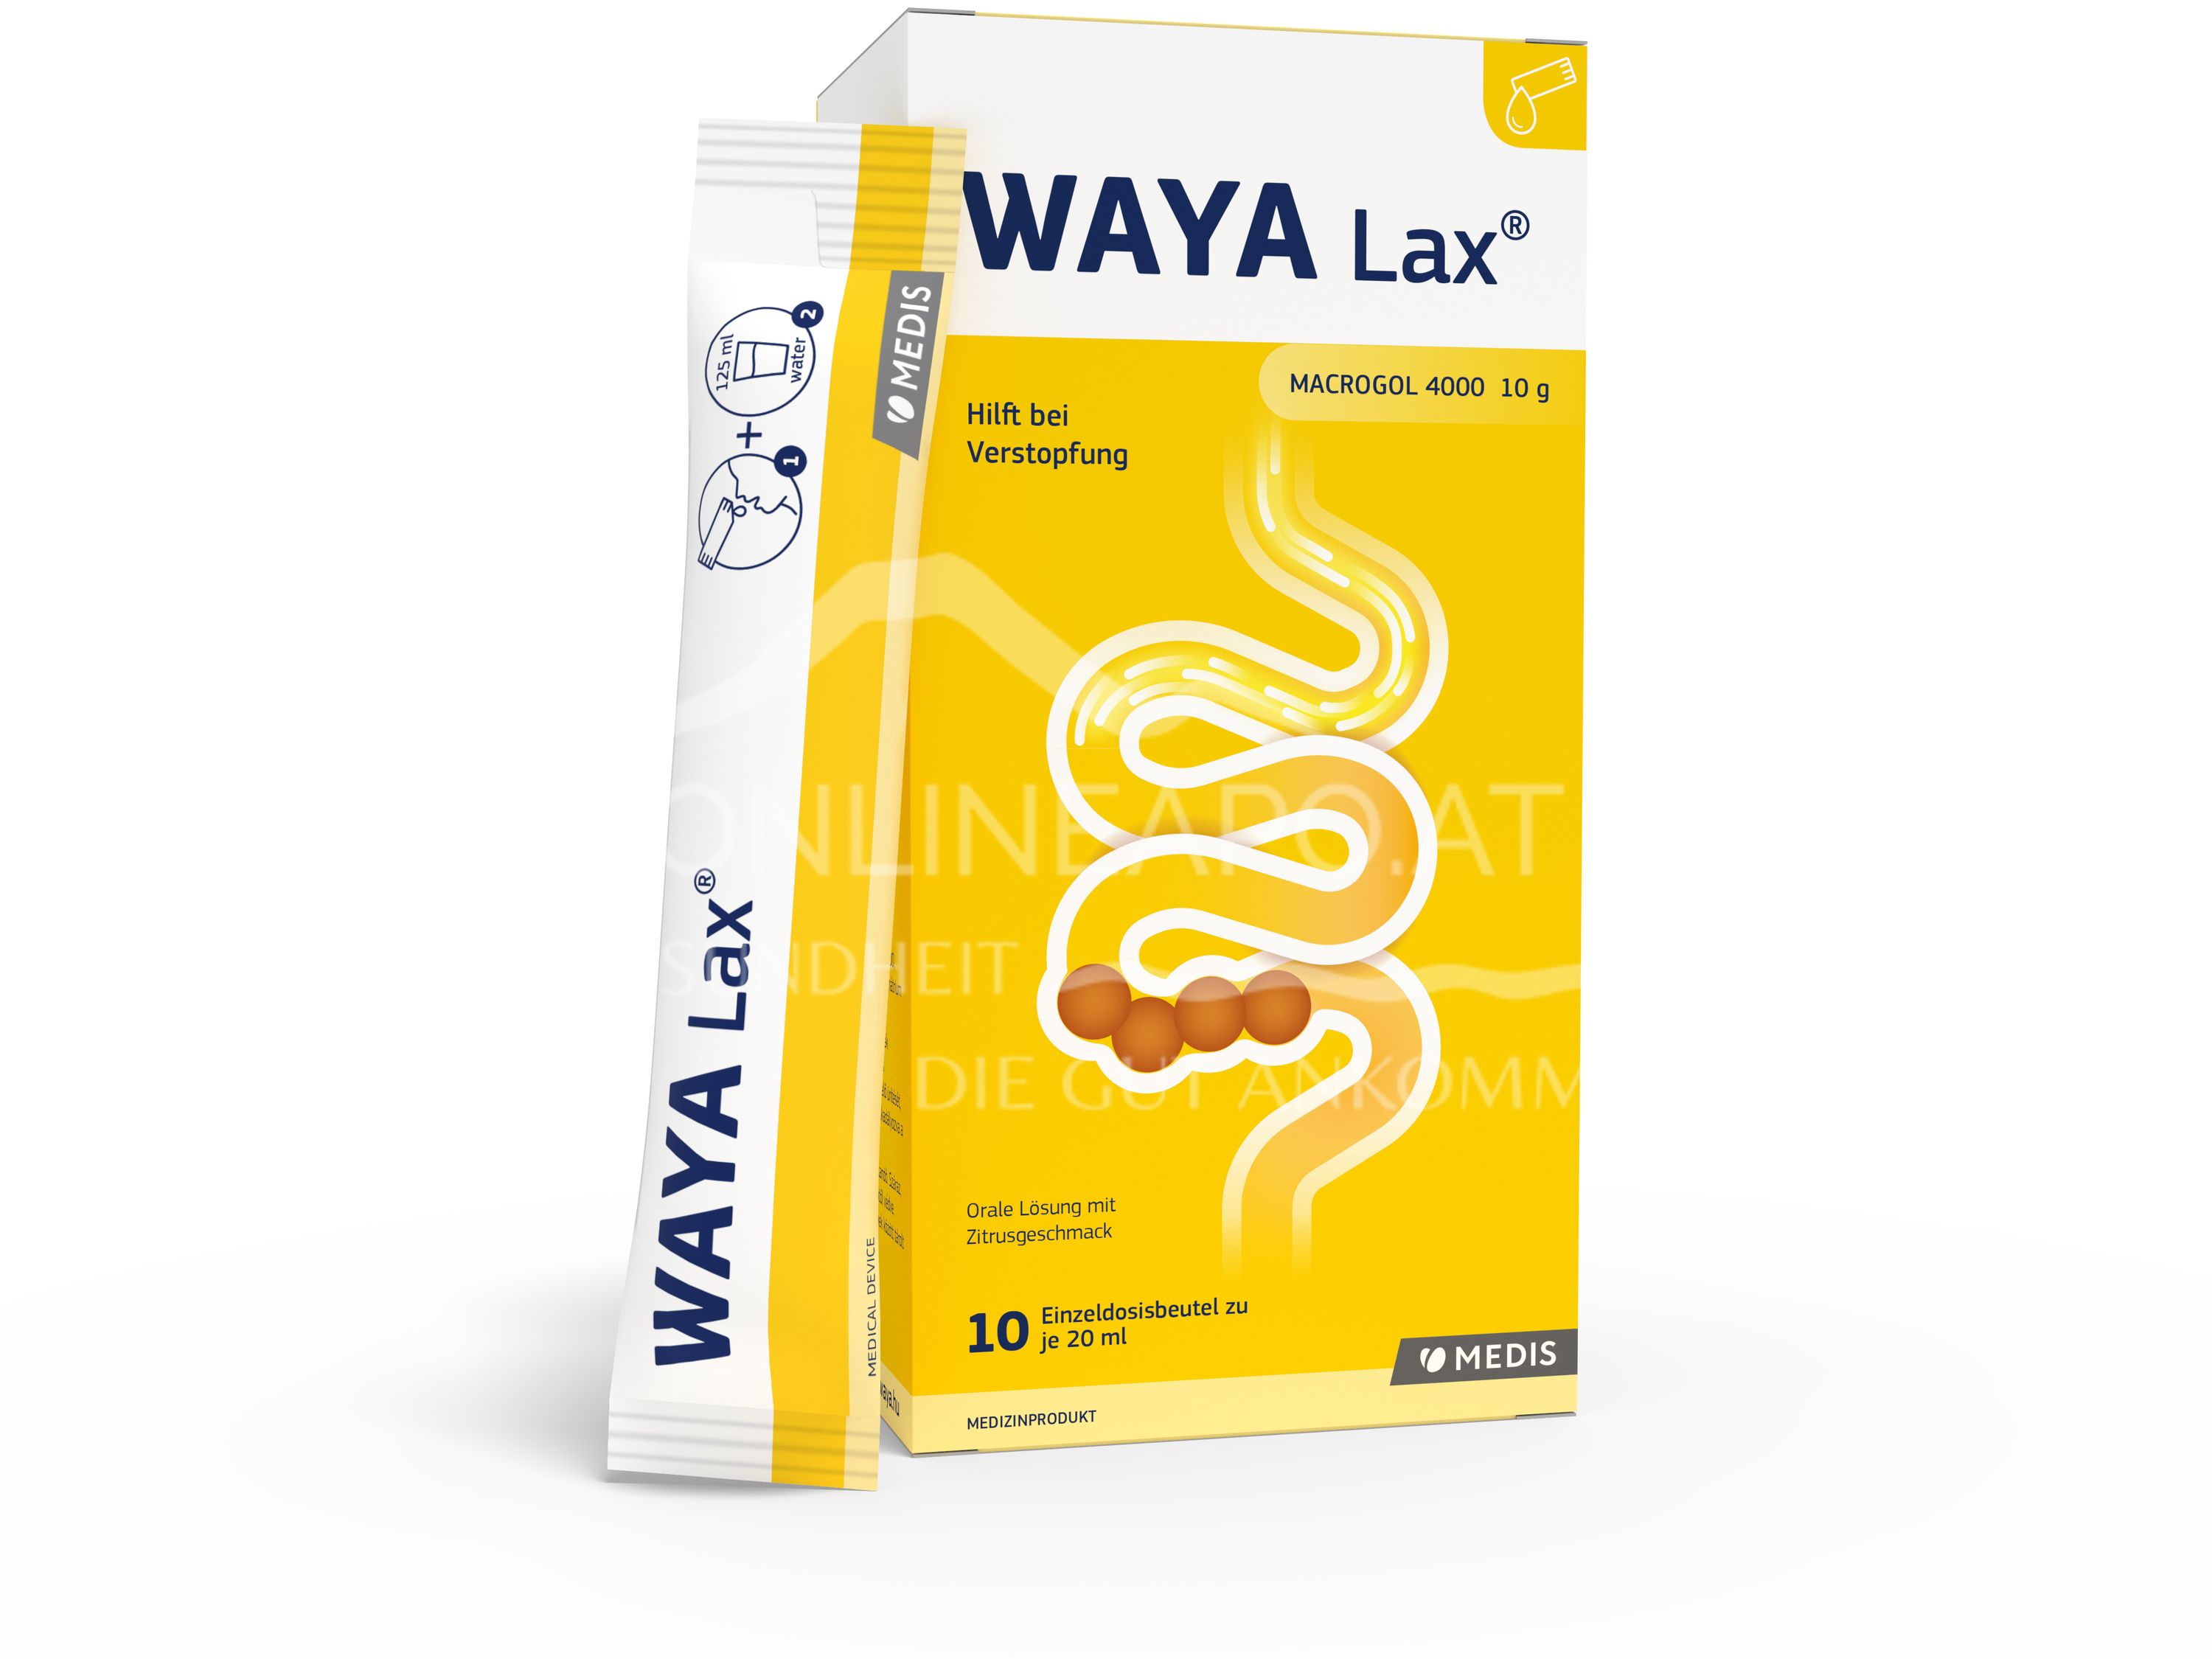 Waya Lax® - Orale Lösung, Portionsbeutel 20 ml